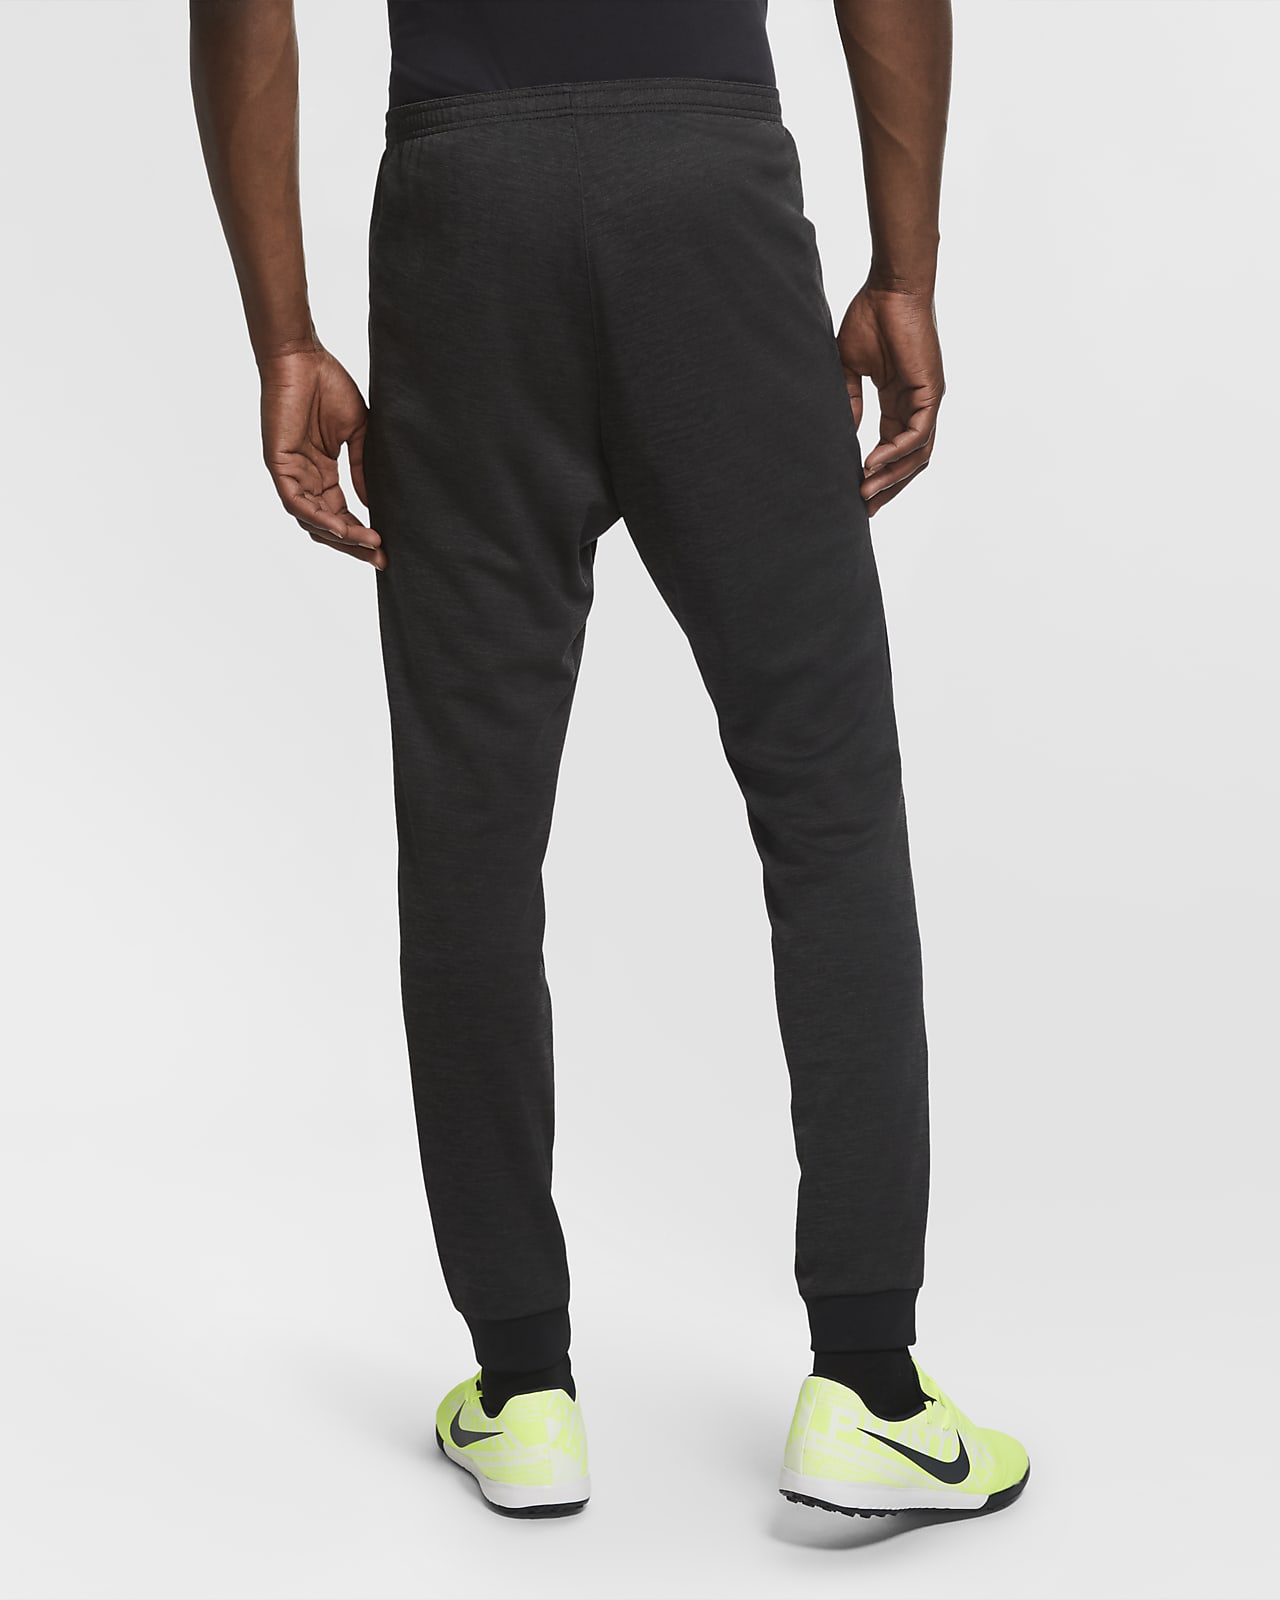 Men - Nike Track Pants - JD Sports Australia